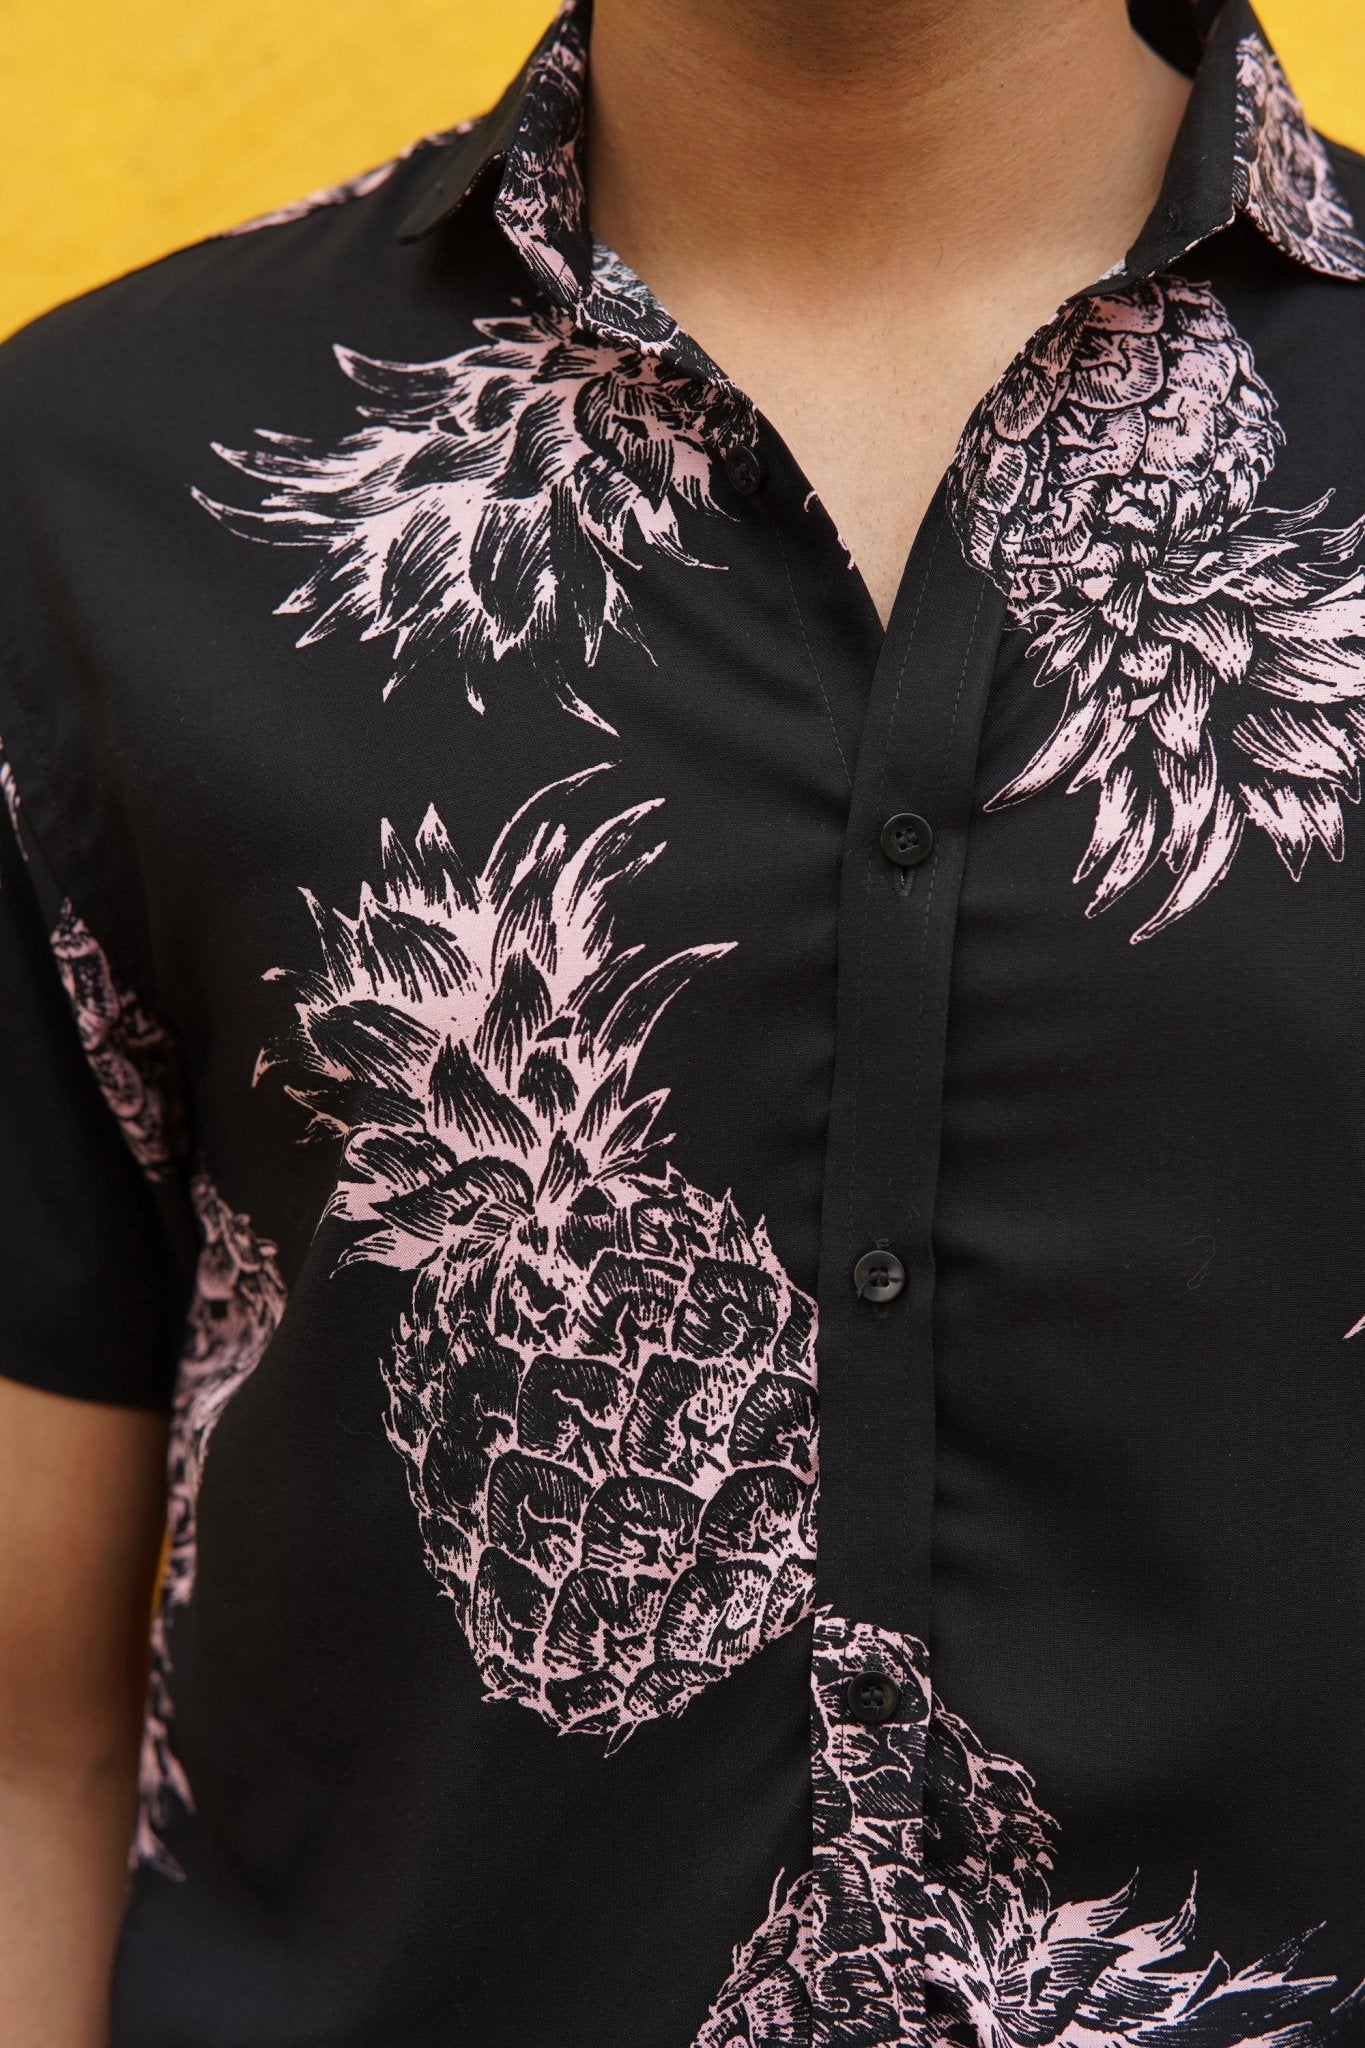 Pineapple - Printed Shirt - Cotton Village India